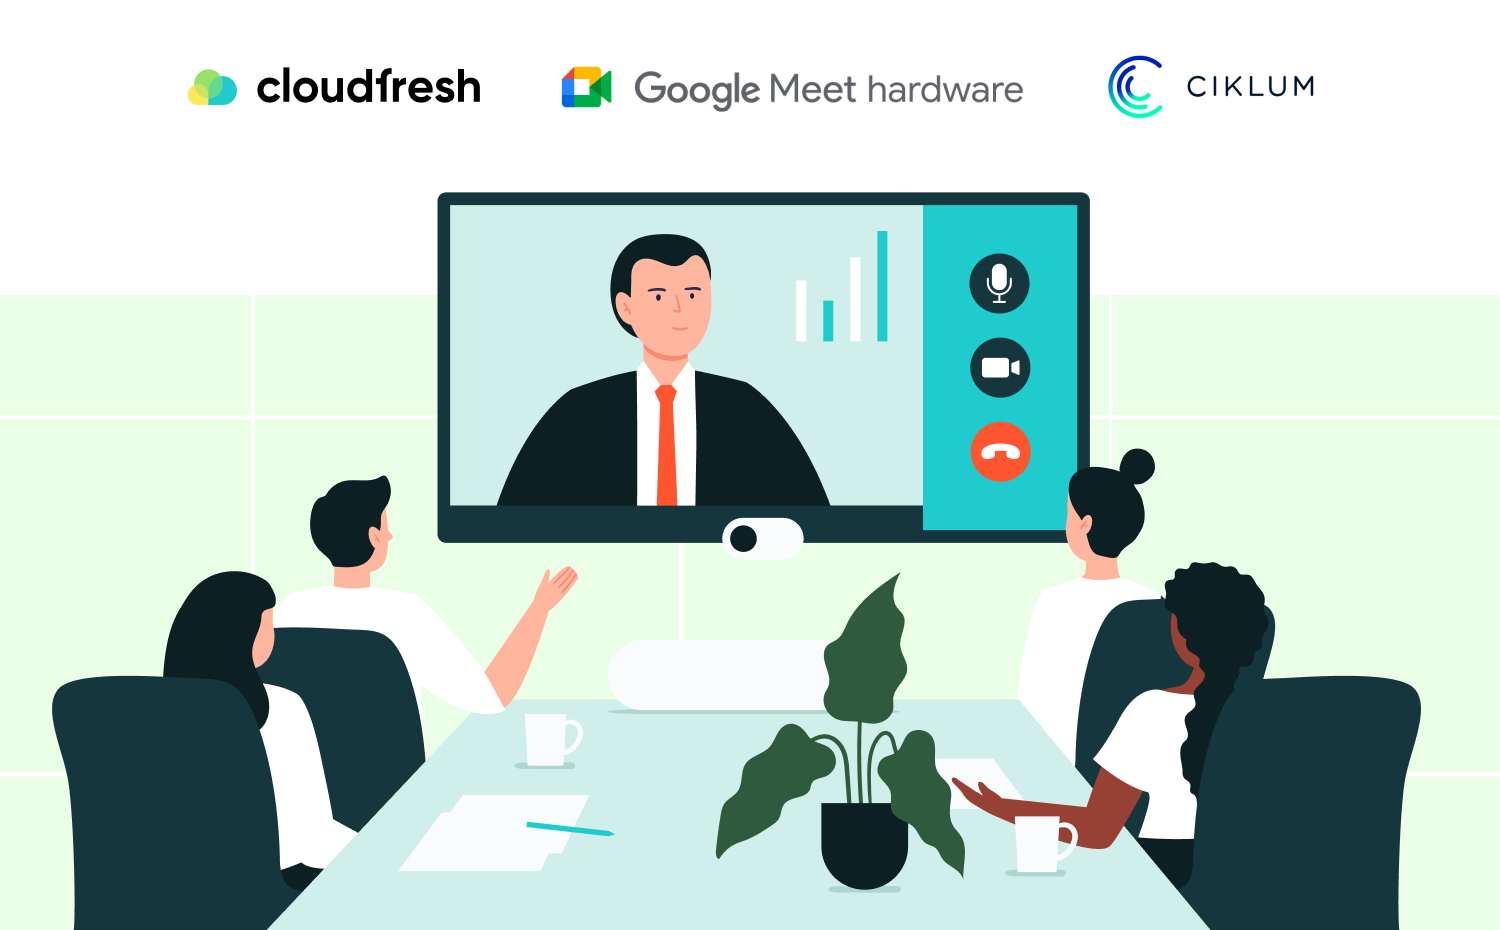 Cloudfre & Google Meet Hardware & Ciklum